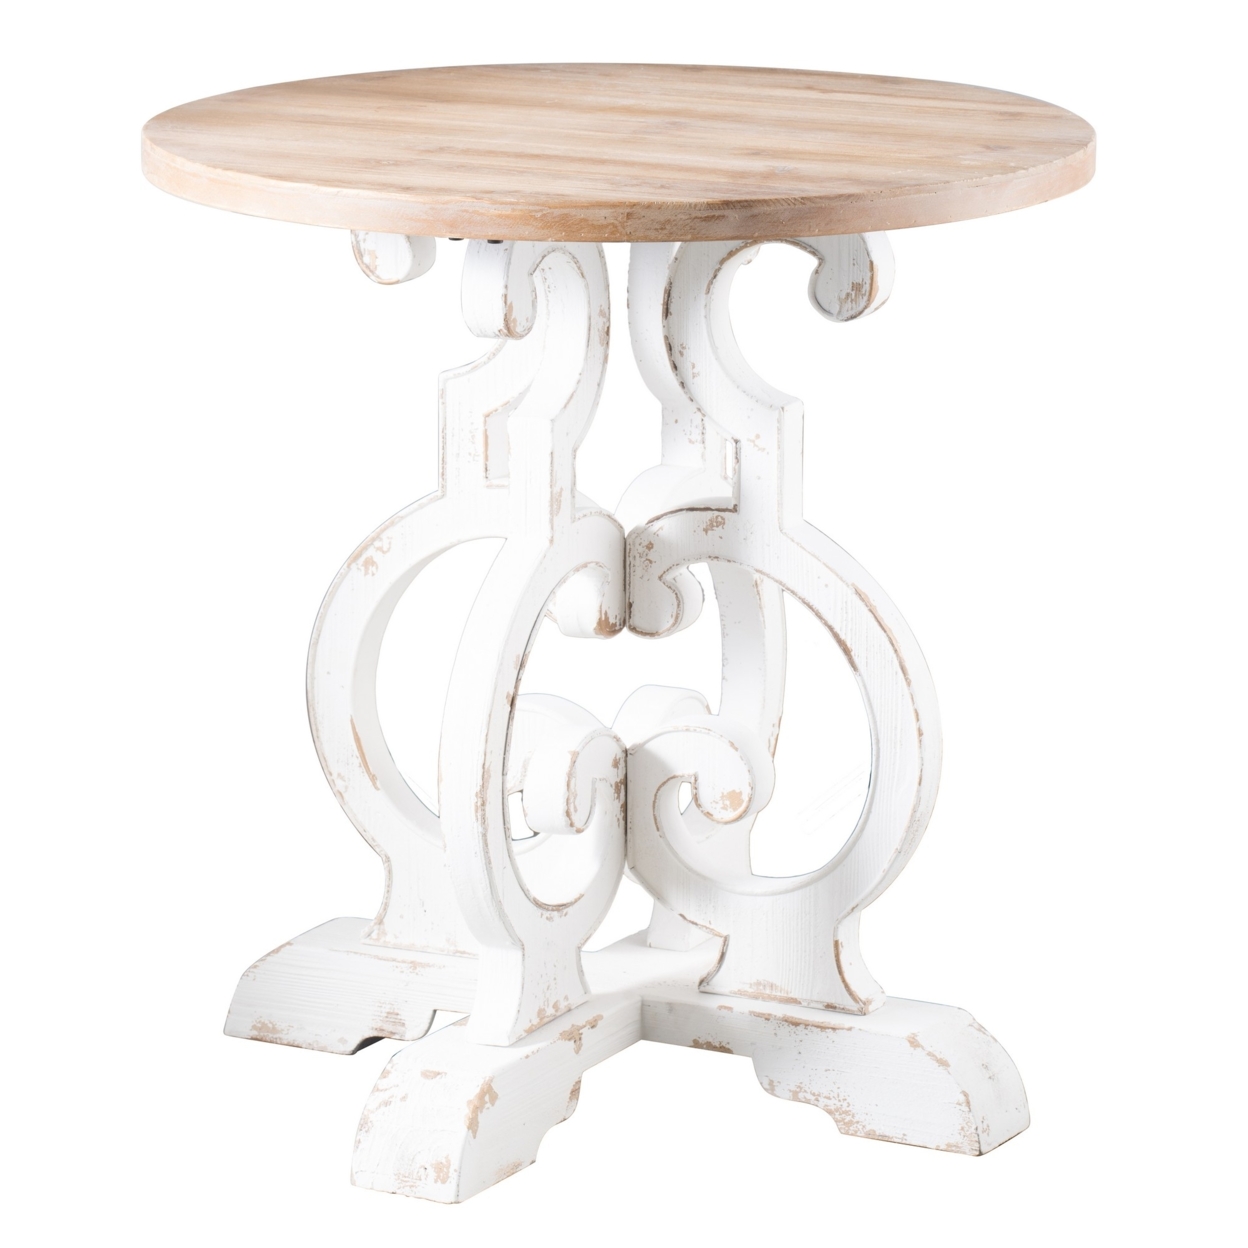 36 Inch Round Table, Classic, Sculptural Base, Wood, Modern, White, Brown, Saltoro Sherpi